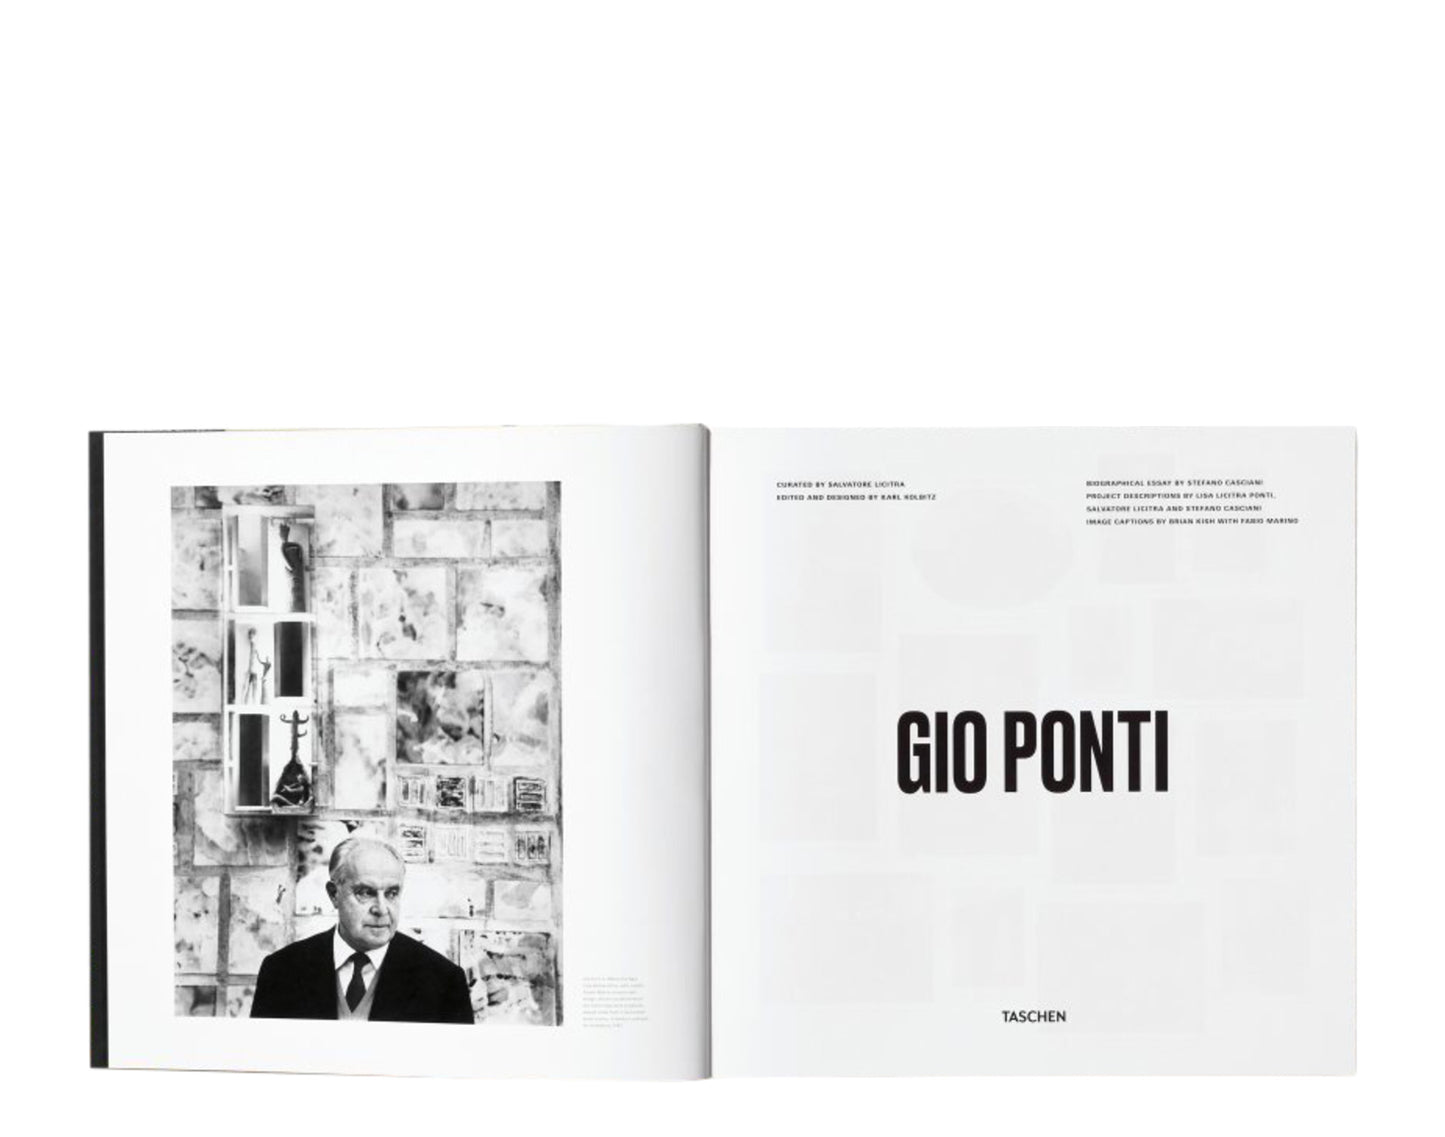 Taschen Books - Gio Ponti. Art Edition - Limited to 1,000